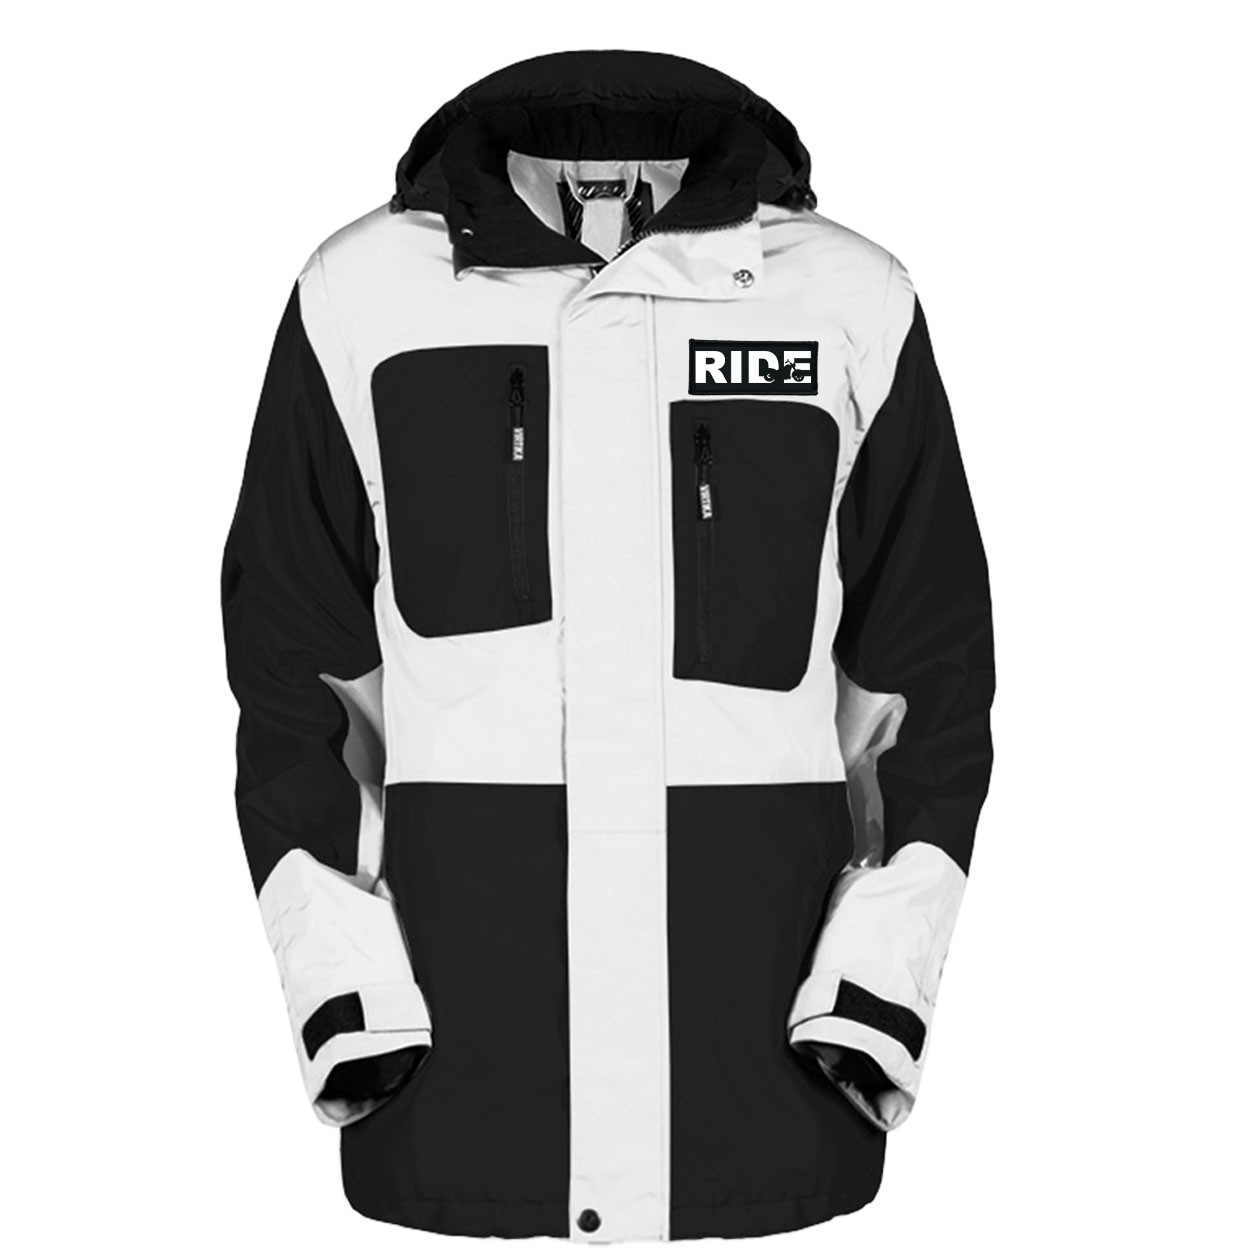 Ride Cruiser Logo Classic Woven Patch Pro Snowboard Jacket (Black/White)